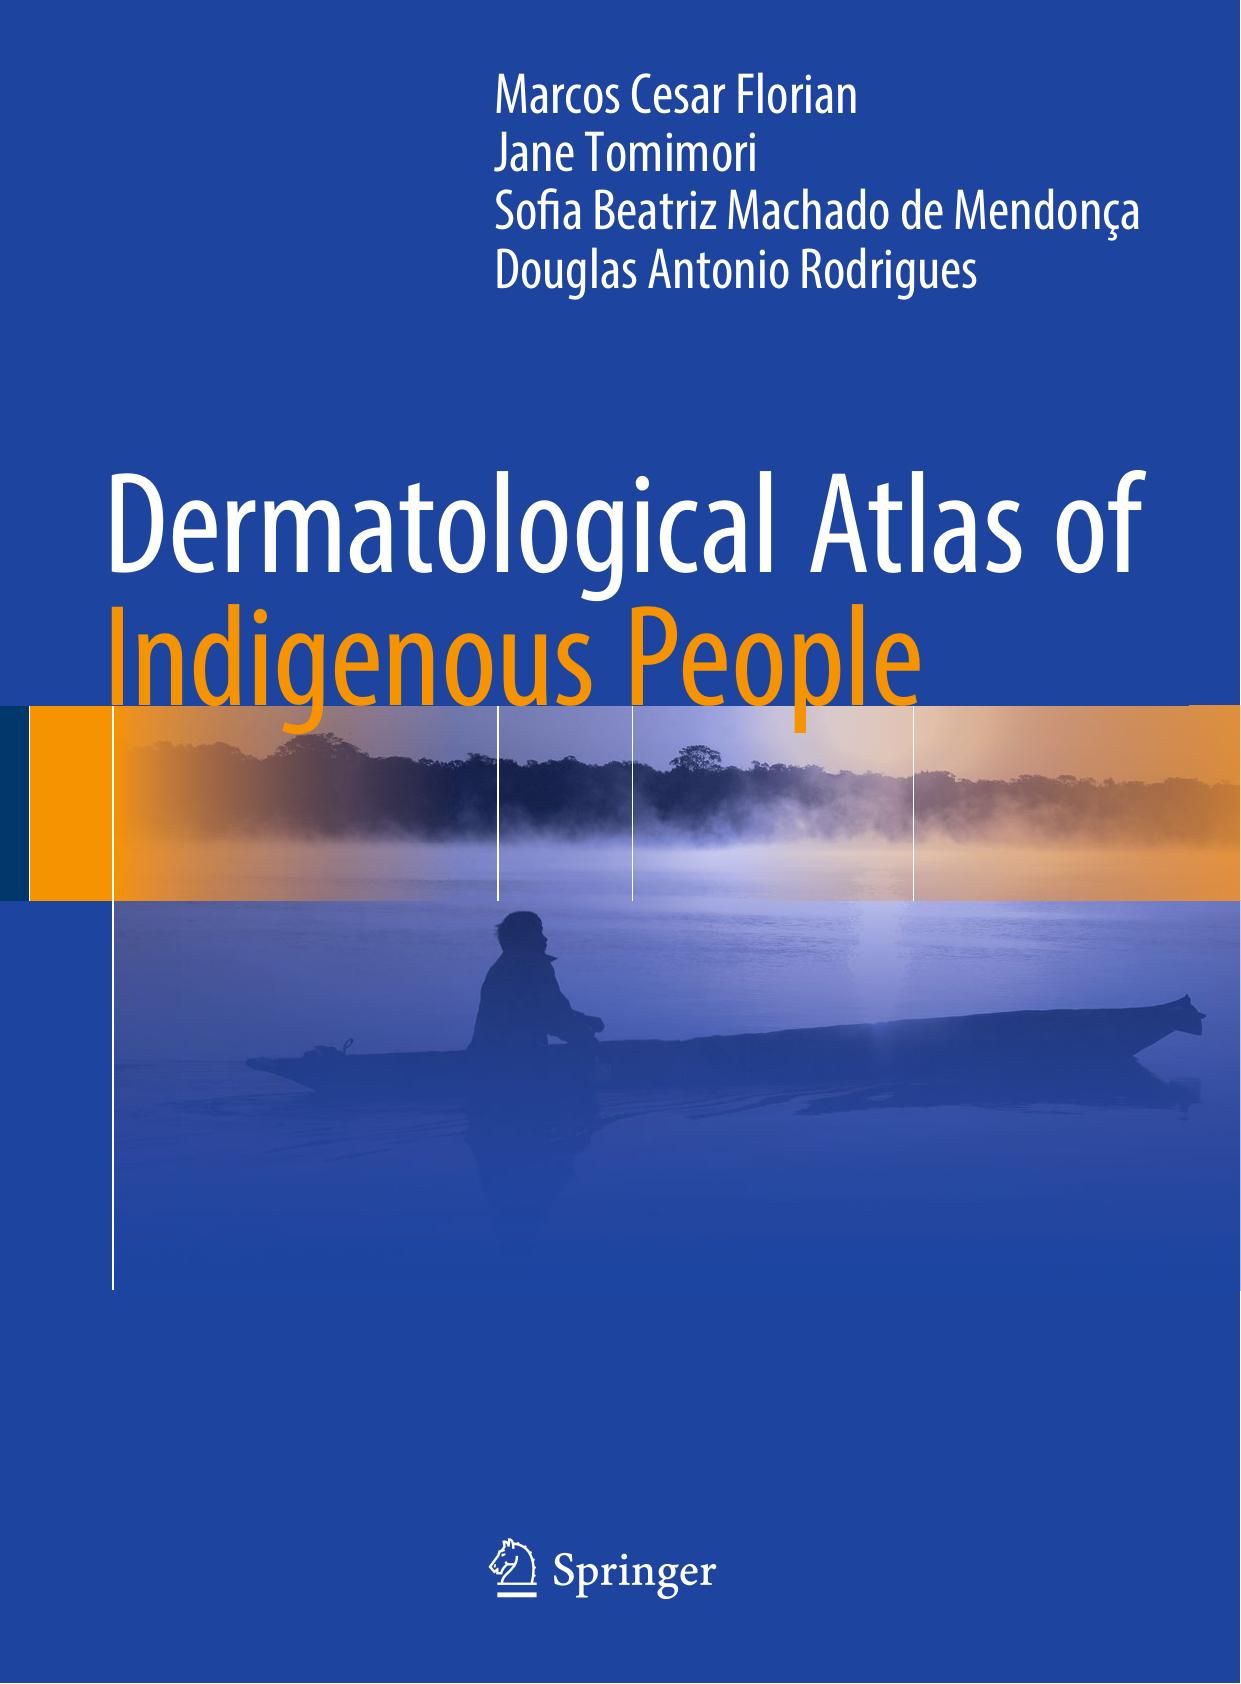 Dermatological atlas of indigenous people (2017)